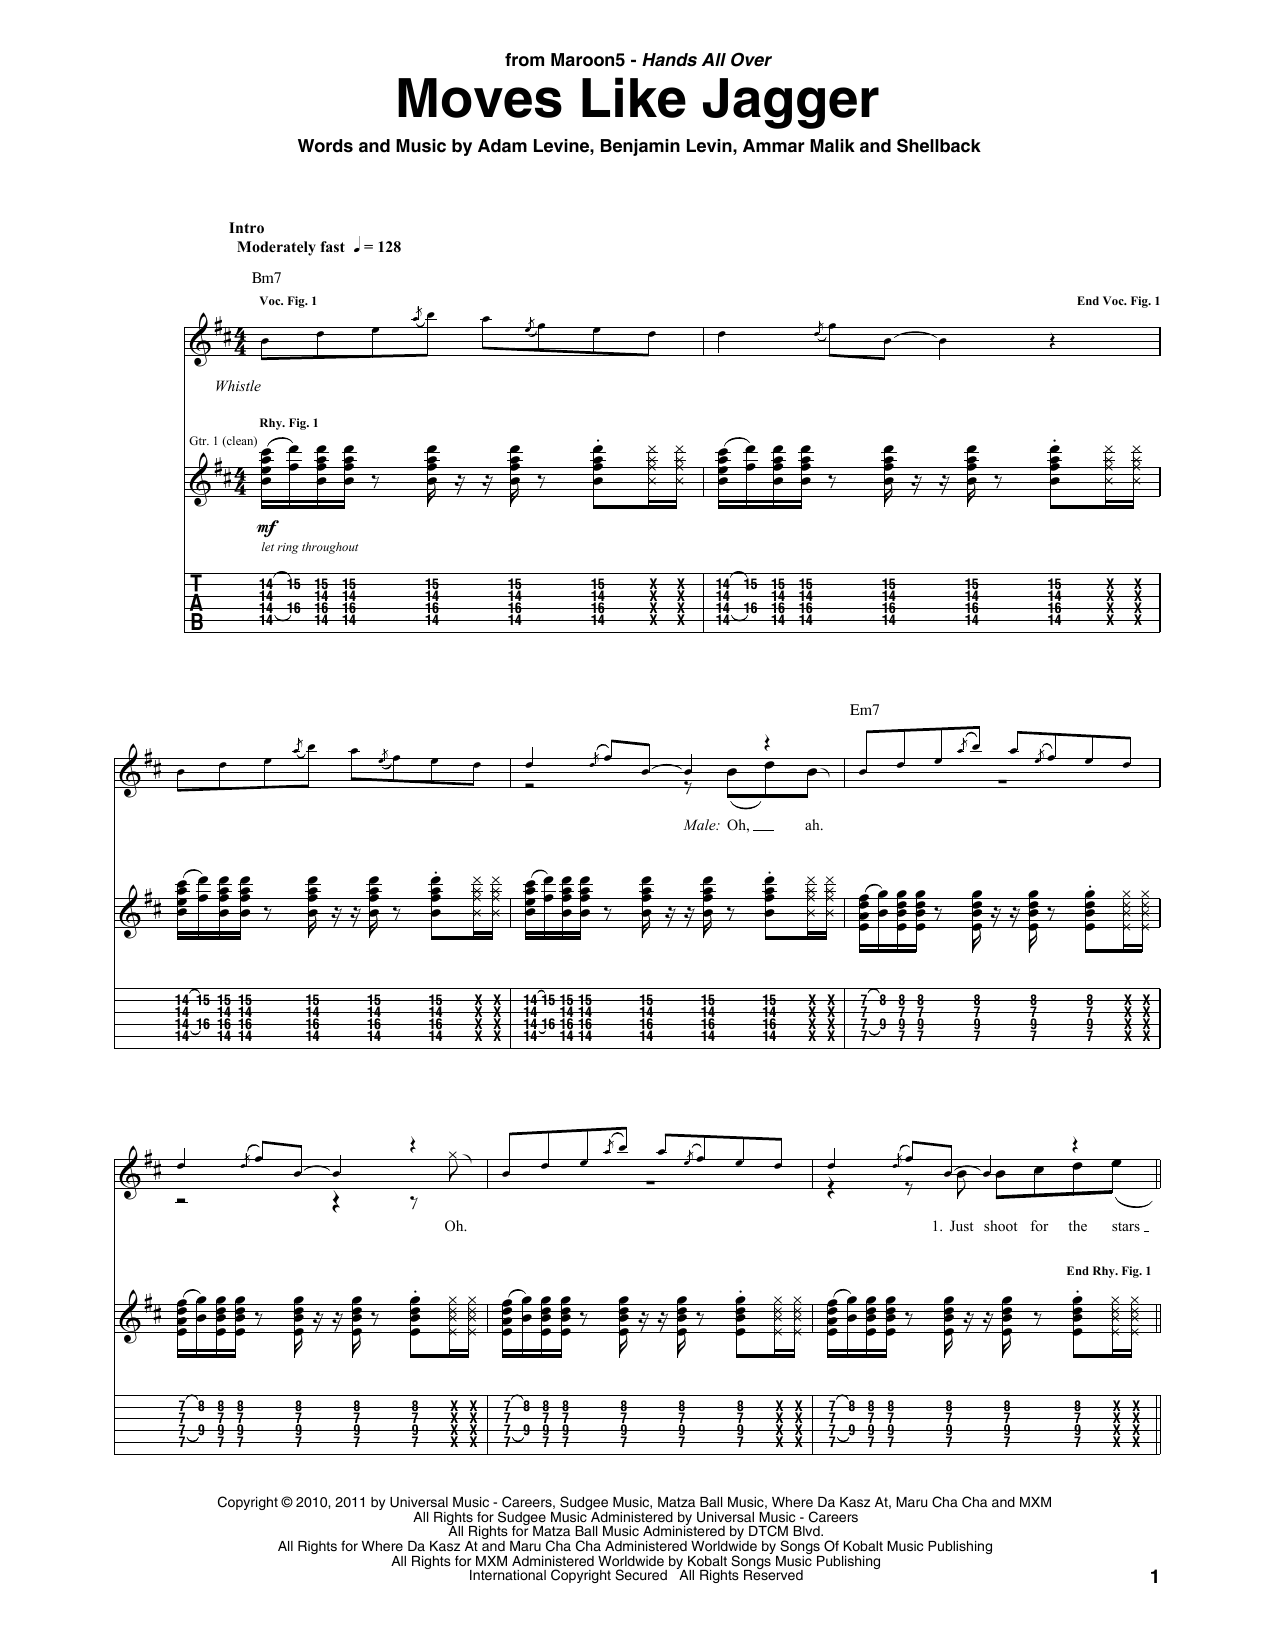 Maroon 5 Moves Like Jagger (feat. Christina Aguilera) Sheet Music Notes & Chords for Real Book – Melody, Lyrics & Chords - Download or Print PDF